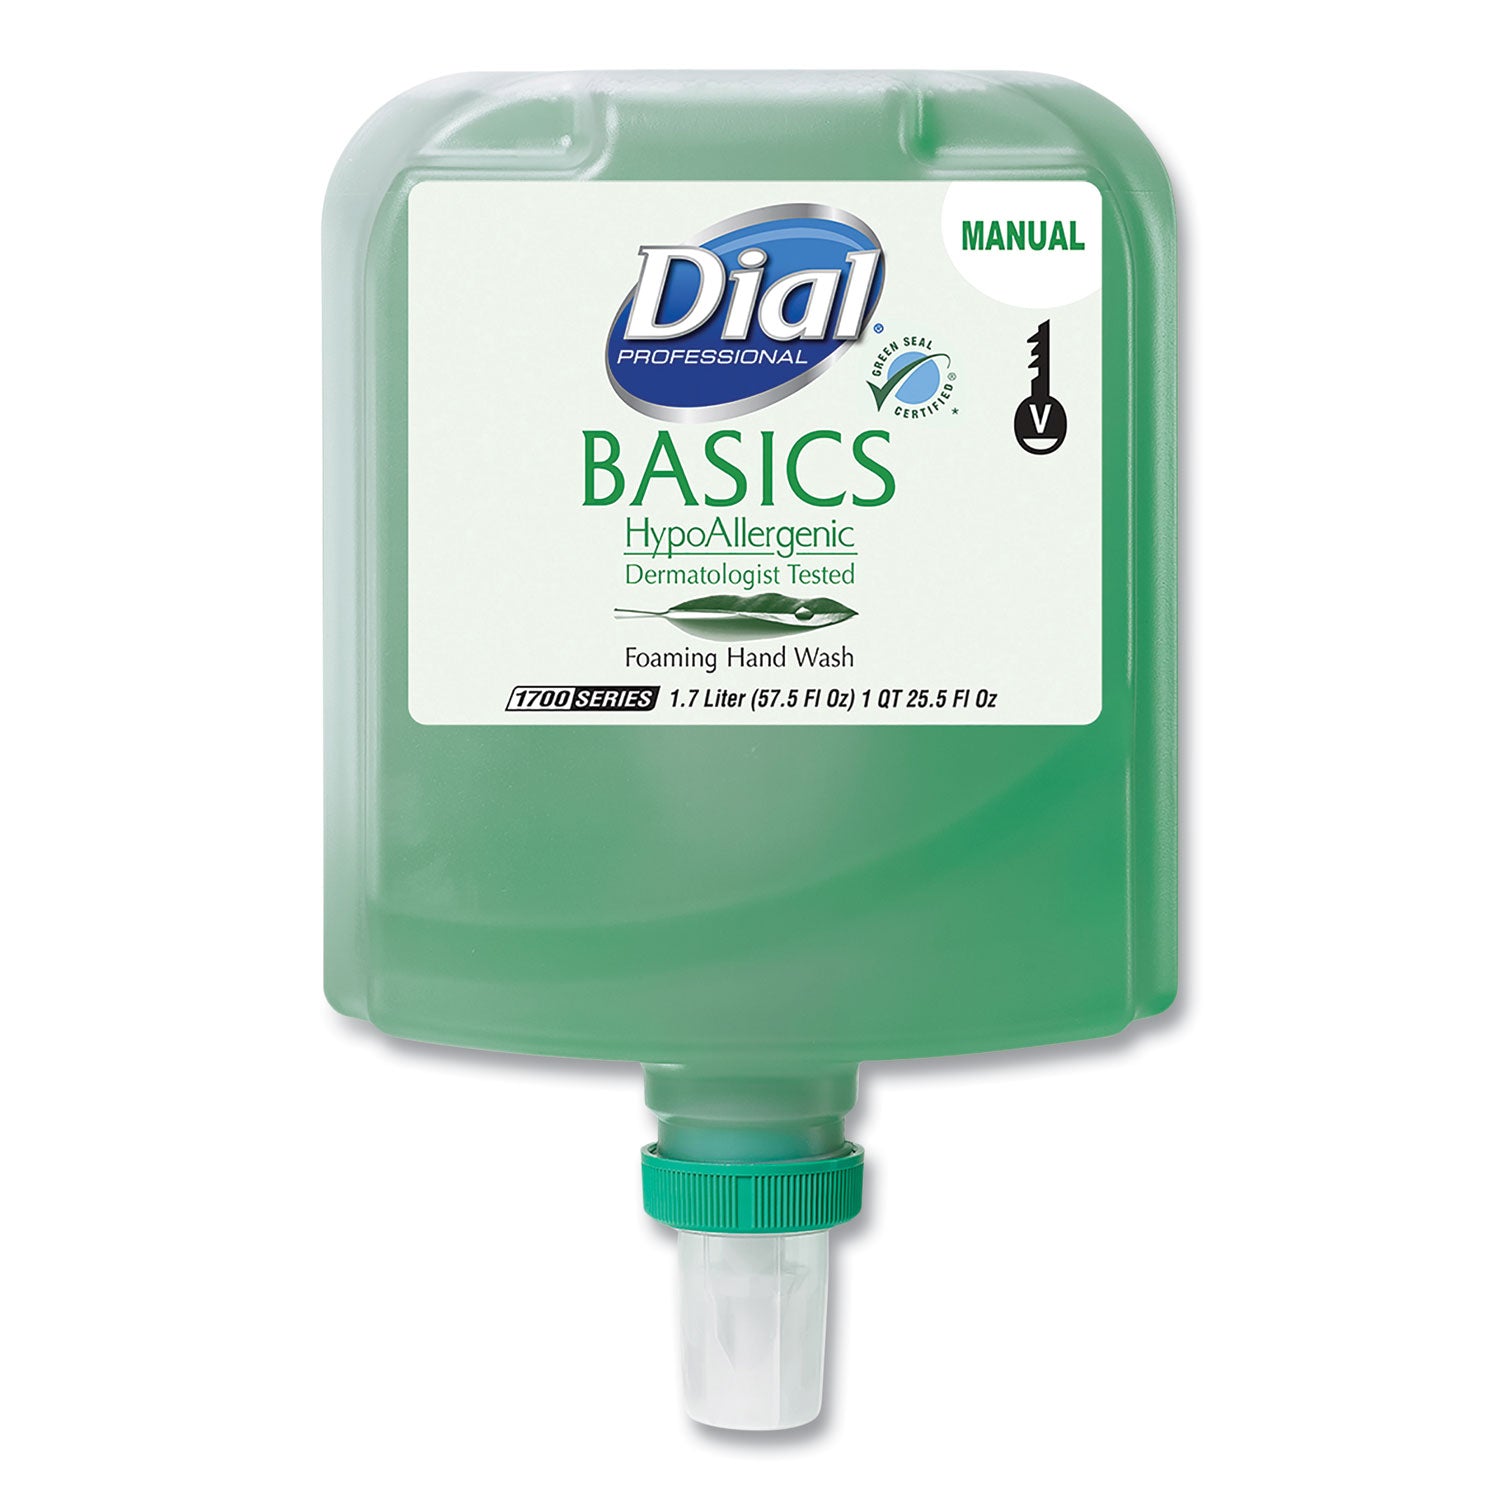 basics-hypoallergenic-foaming-hand-wash-refill-for-dial-1700-v-dispenser-honeysuckle-17-l-3-carton_dia19729ct - 1